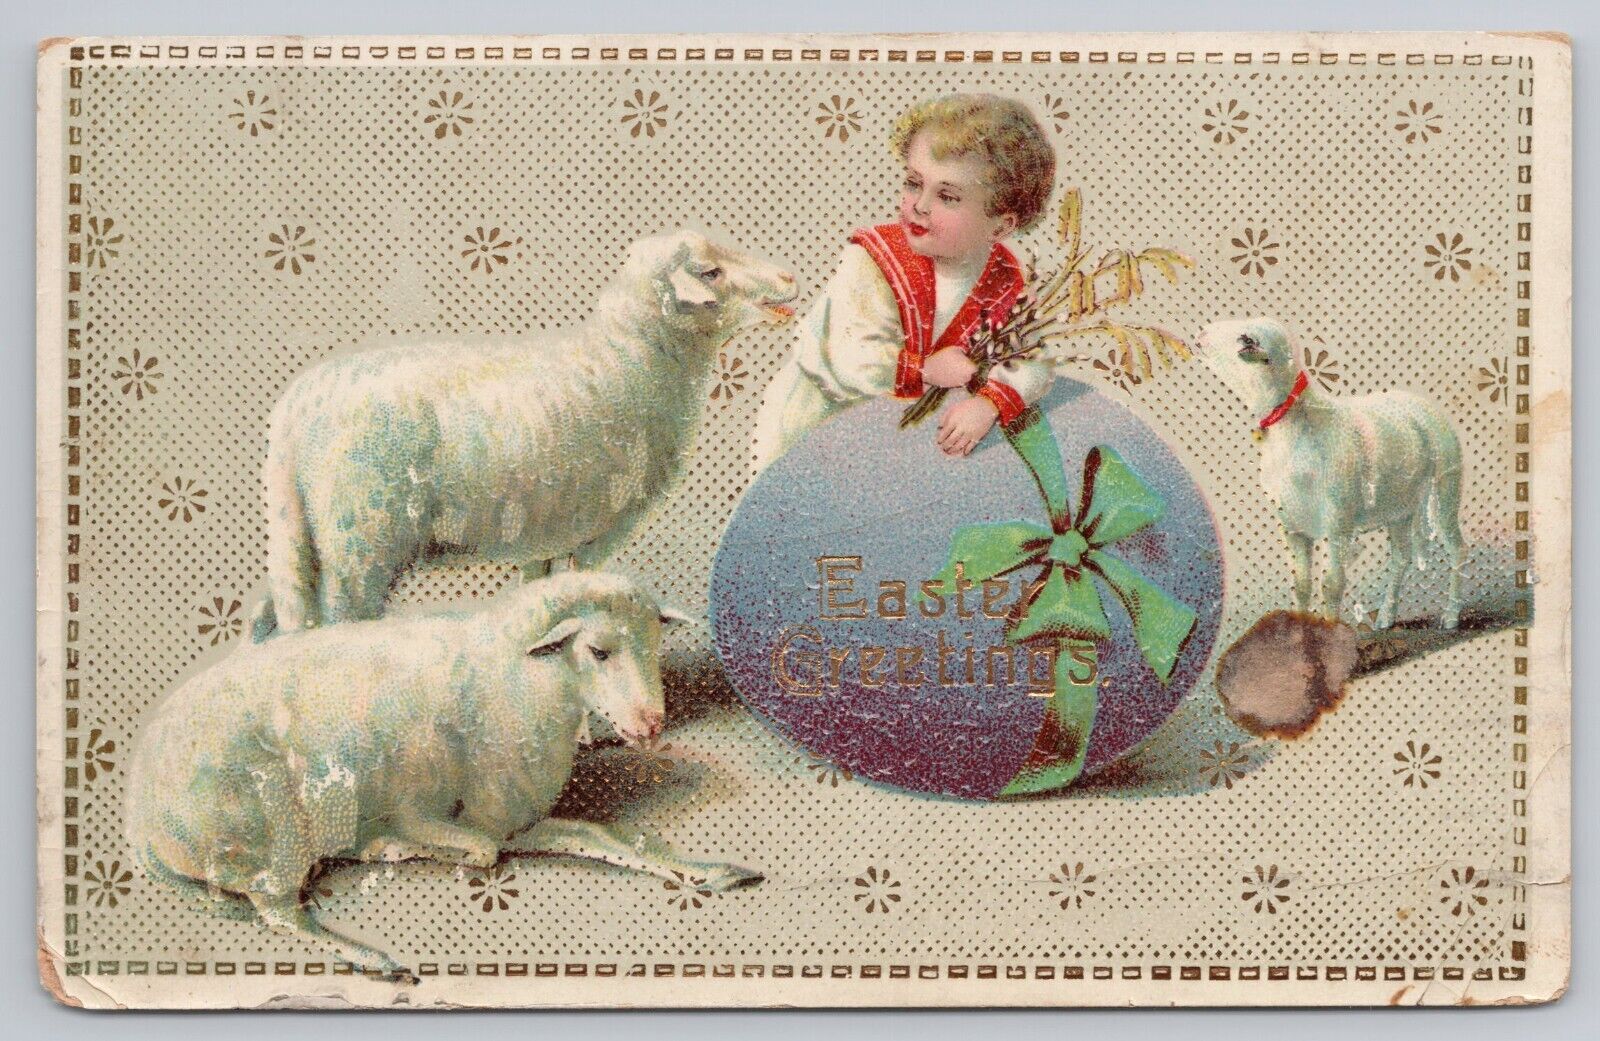 Easter Greetings Cute Boy Big Blue Egg Lamb Sheep c1913 Textured Gel Gold Gilt